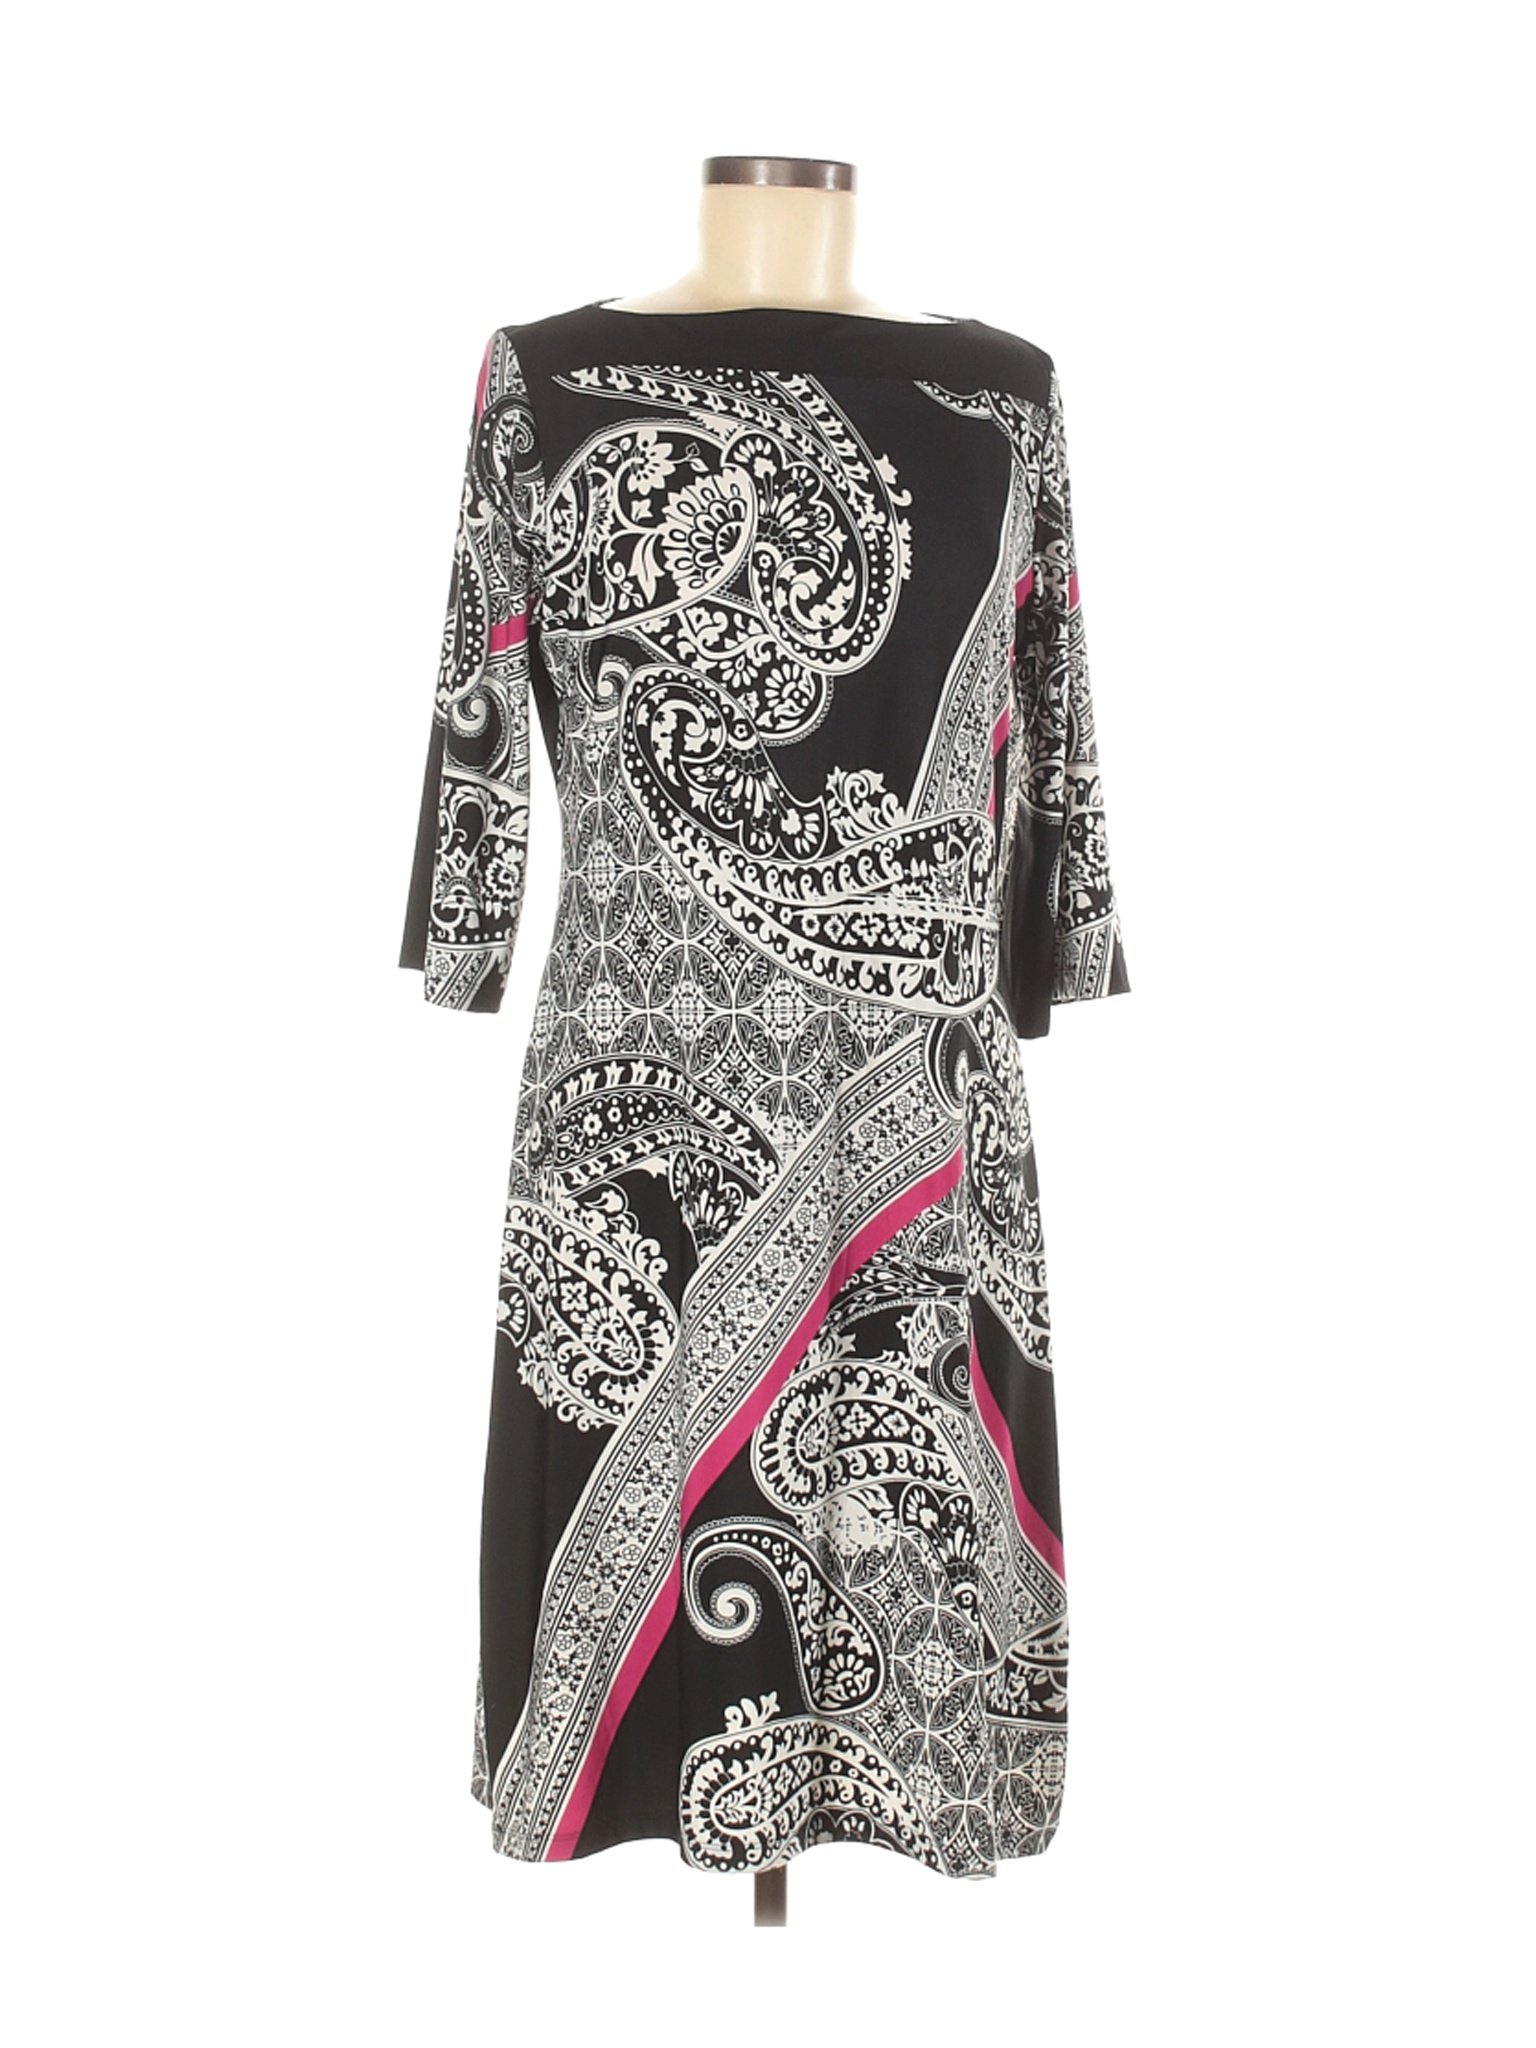 Haani Women Black Casual Dress M | eBay